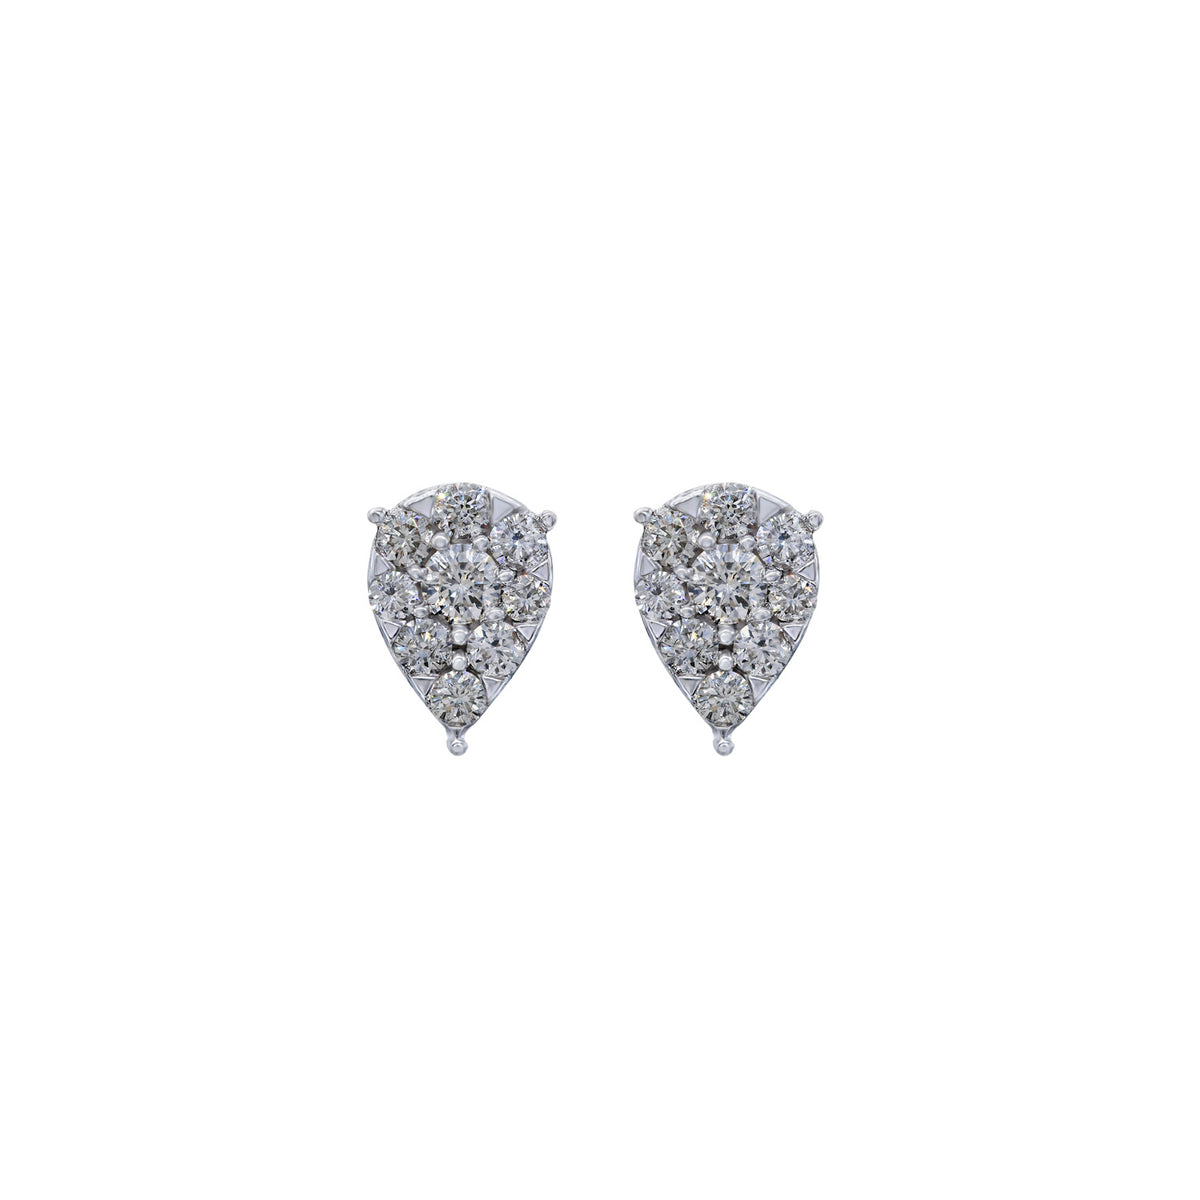 Diamond Earrings. Diamond Studs. Pear shaped diamond earrings